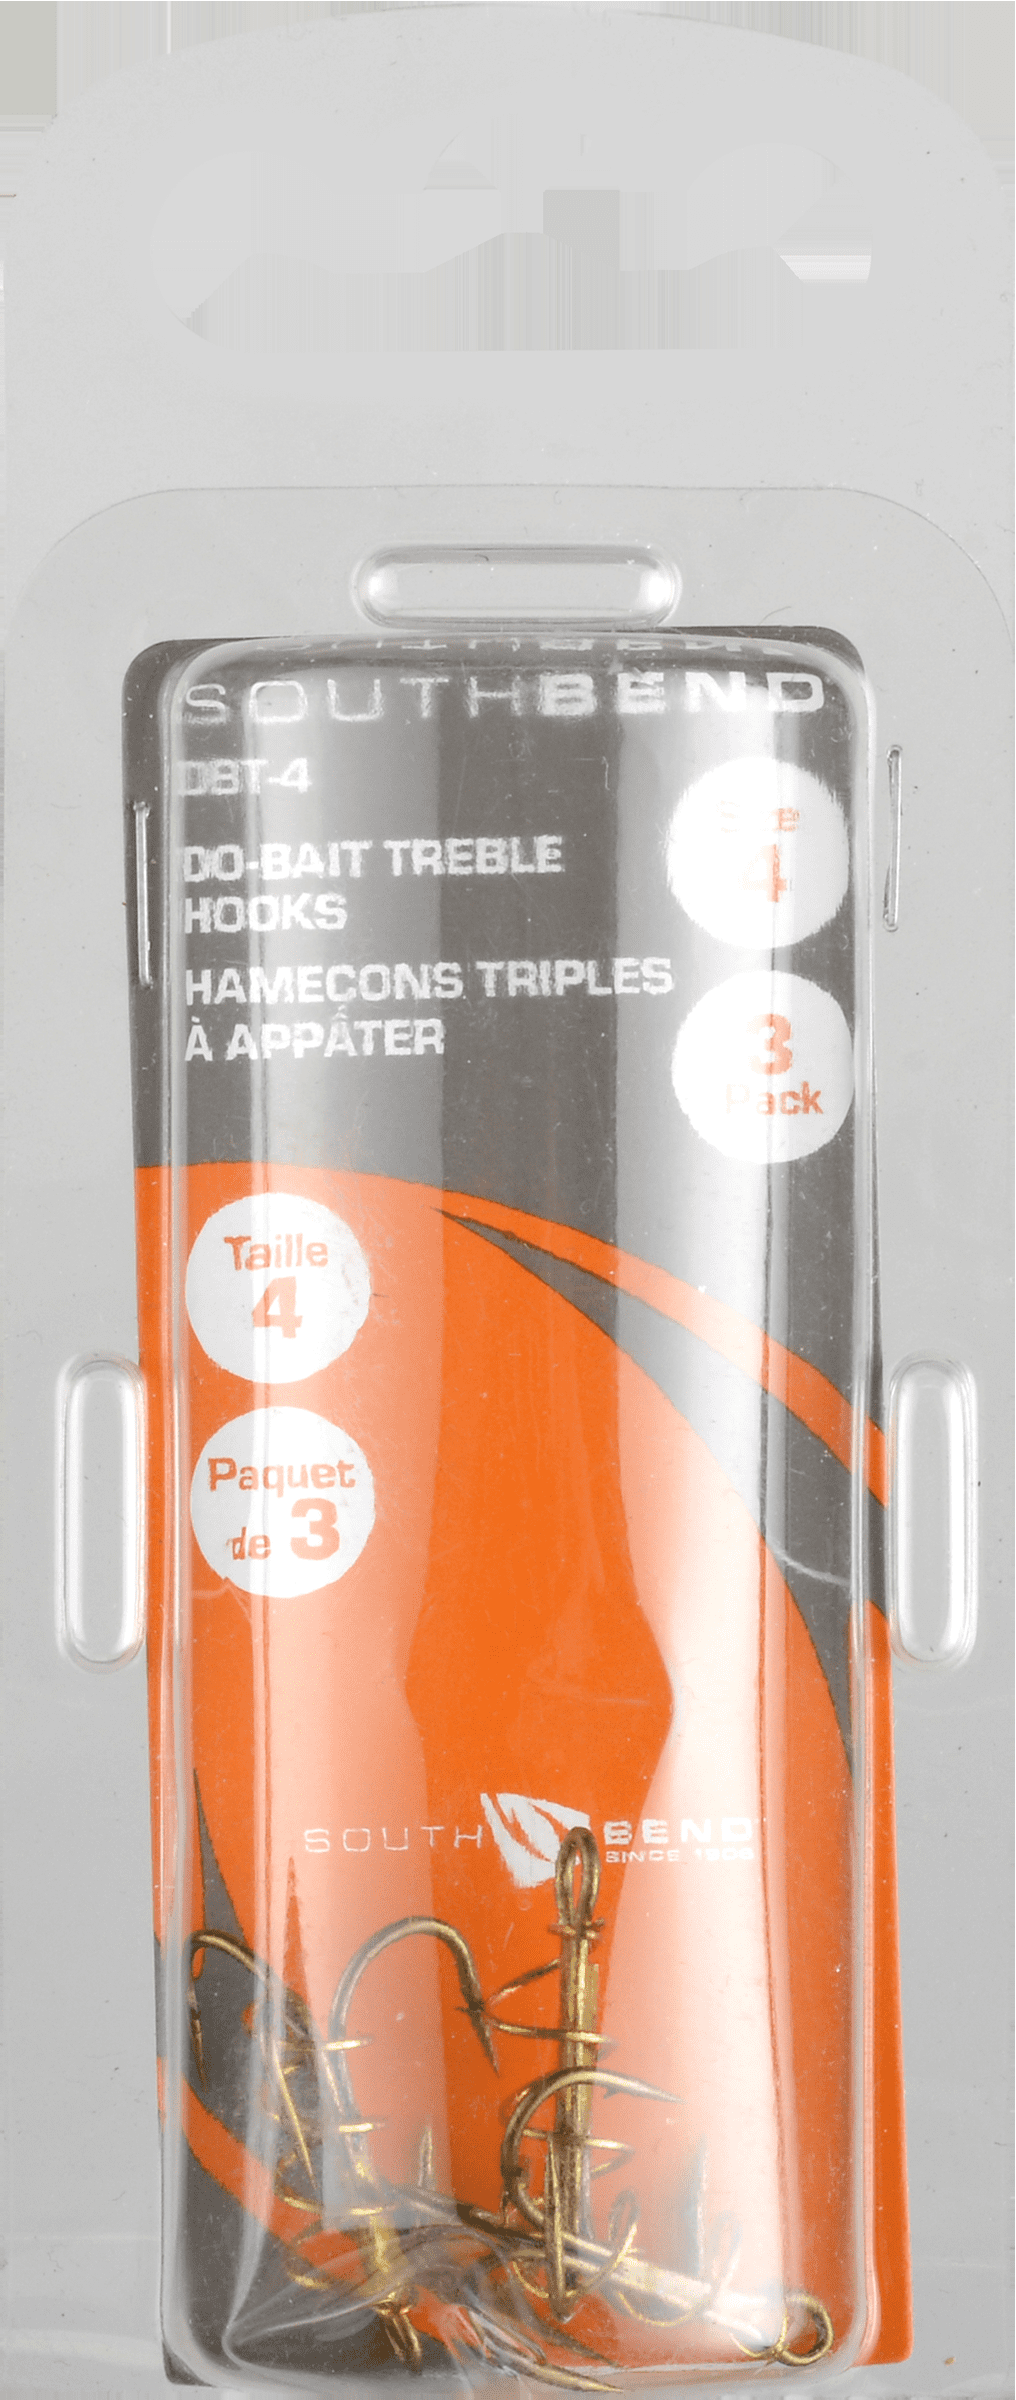 South Bend DBT-4 Do-Bait Treble Hook (3pk) Size 4